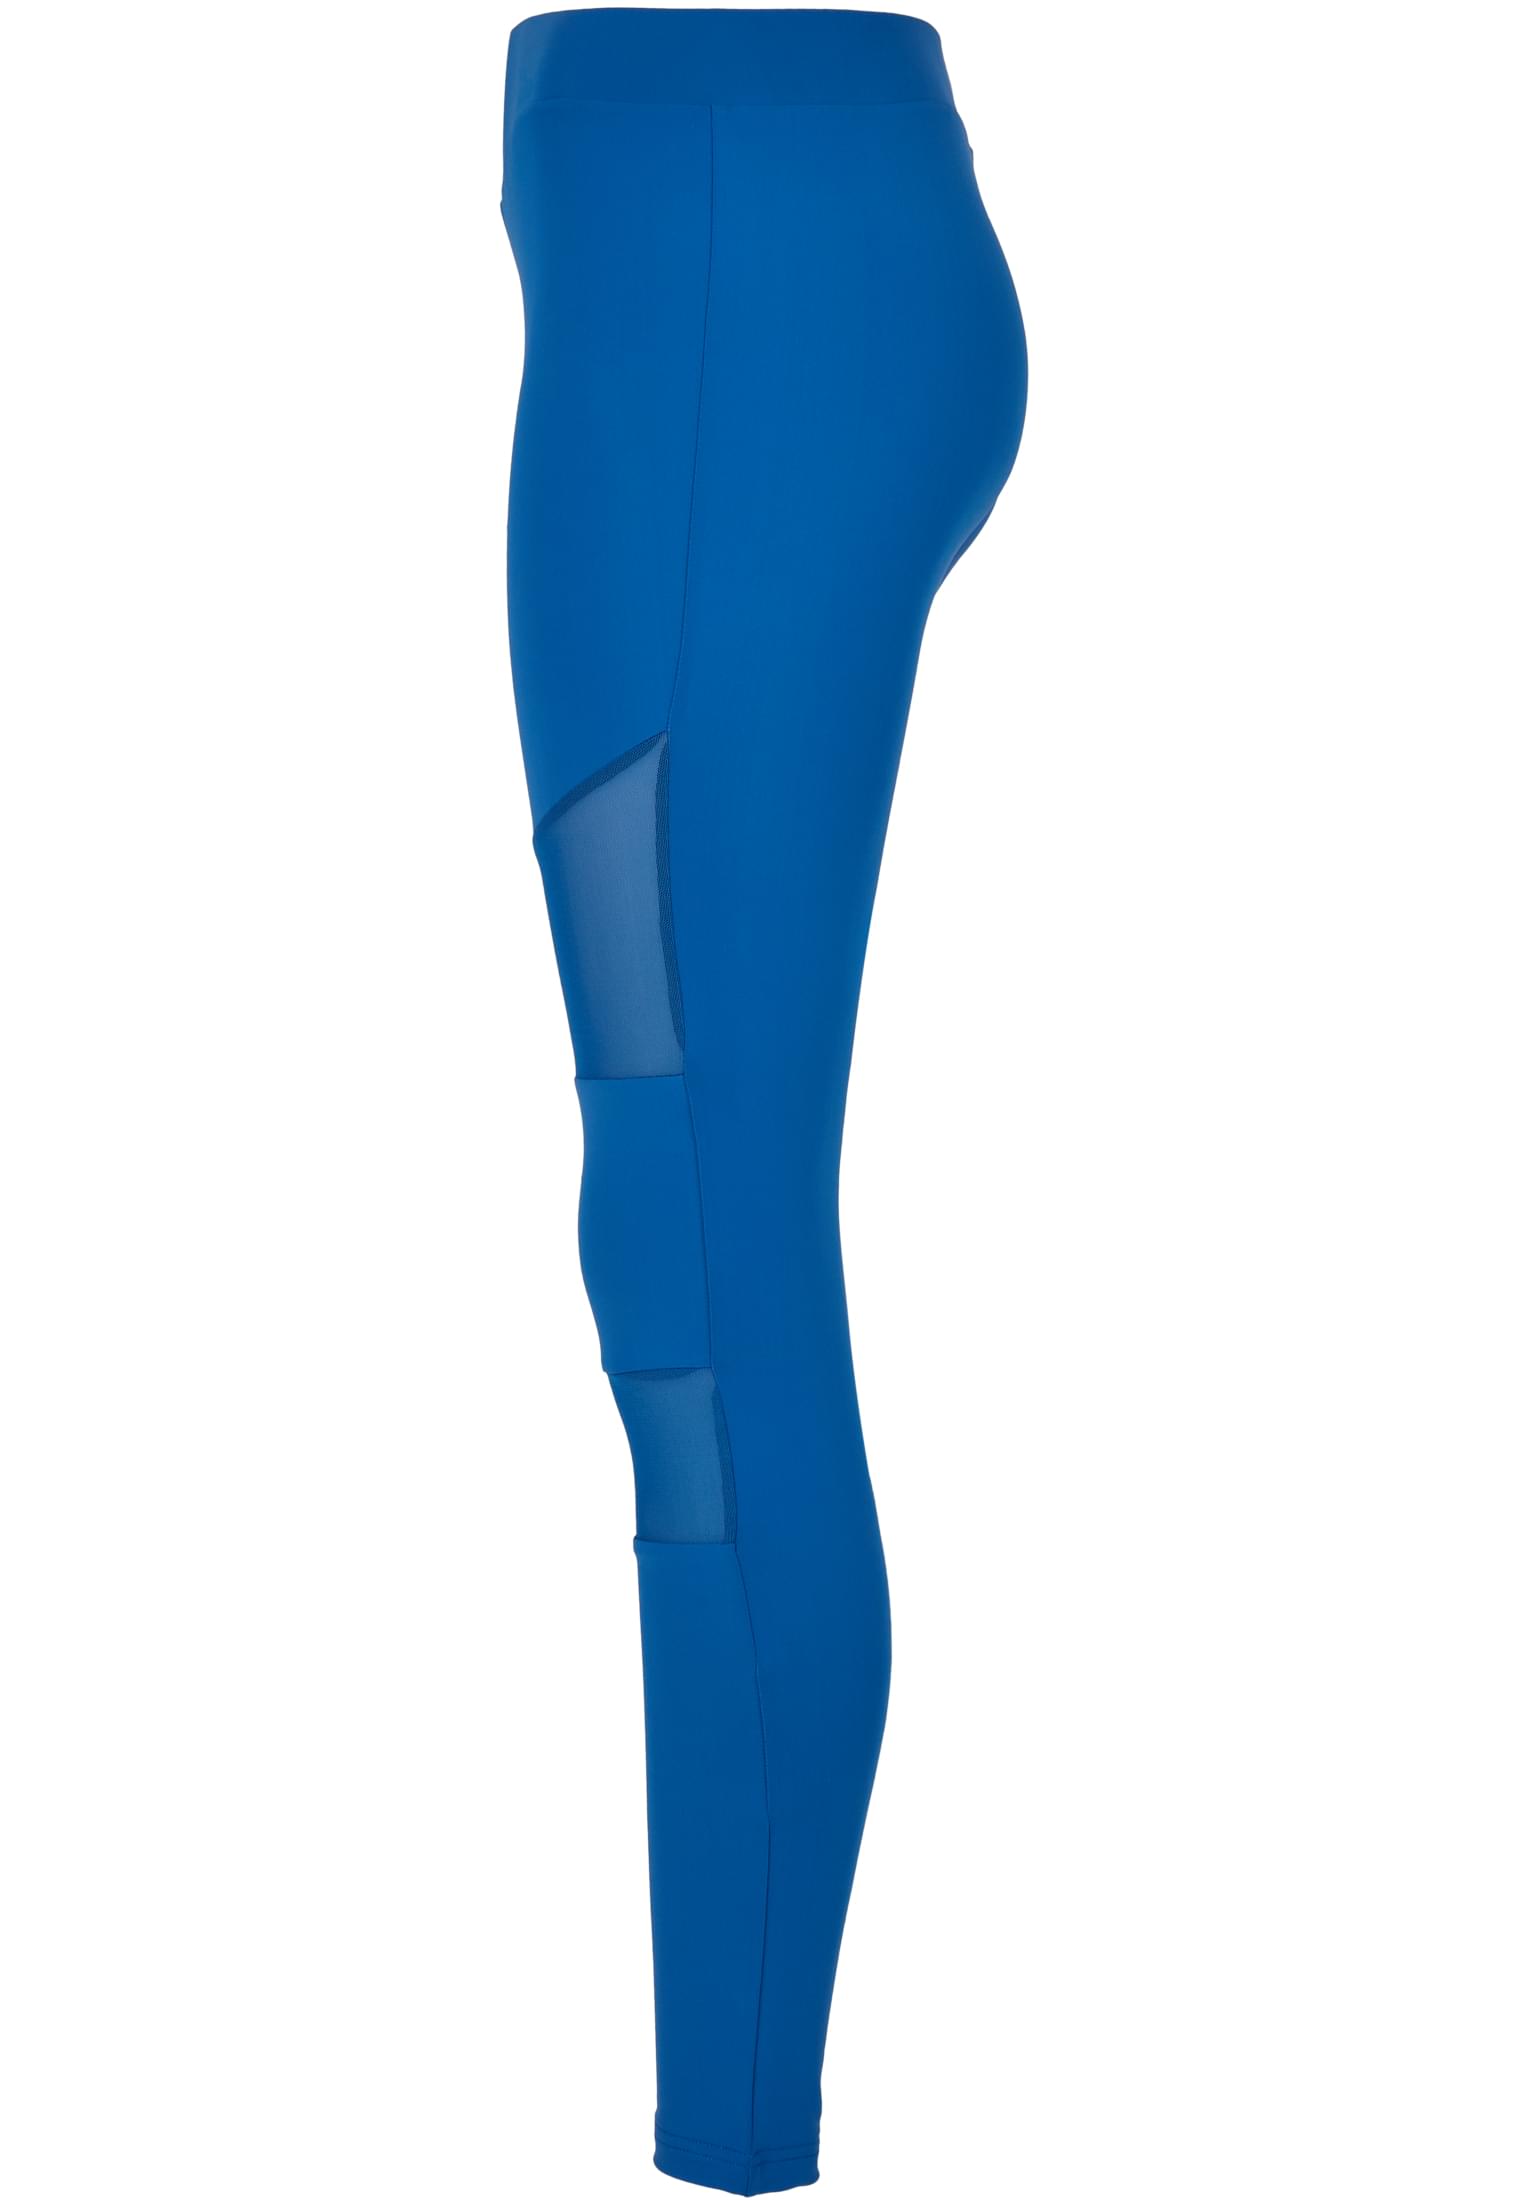 Damen Ladies Tech Mesh Leggings in Farbe sporty blue